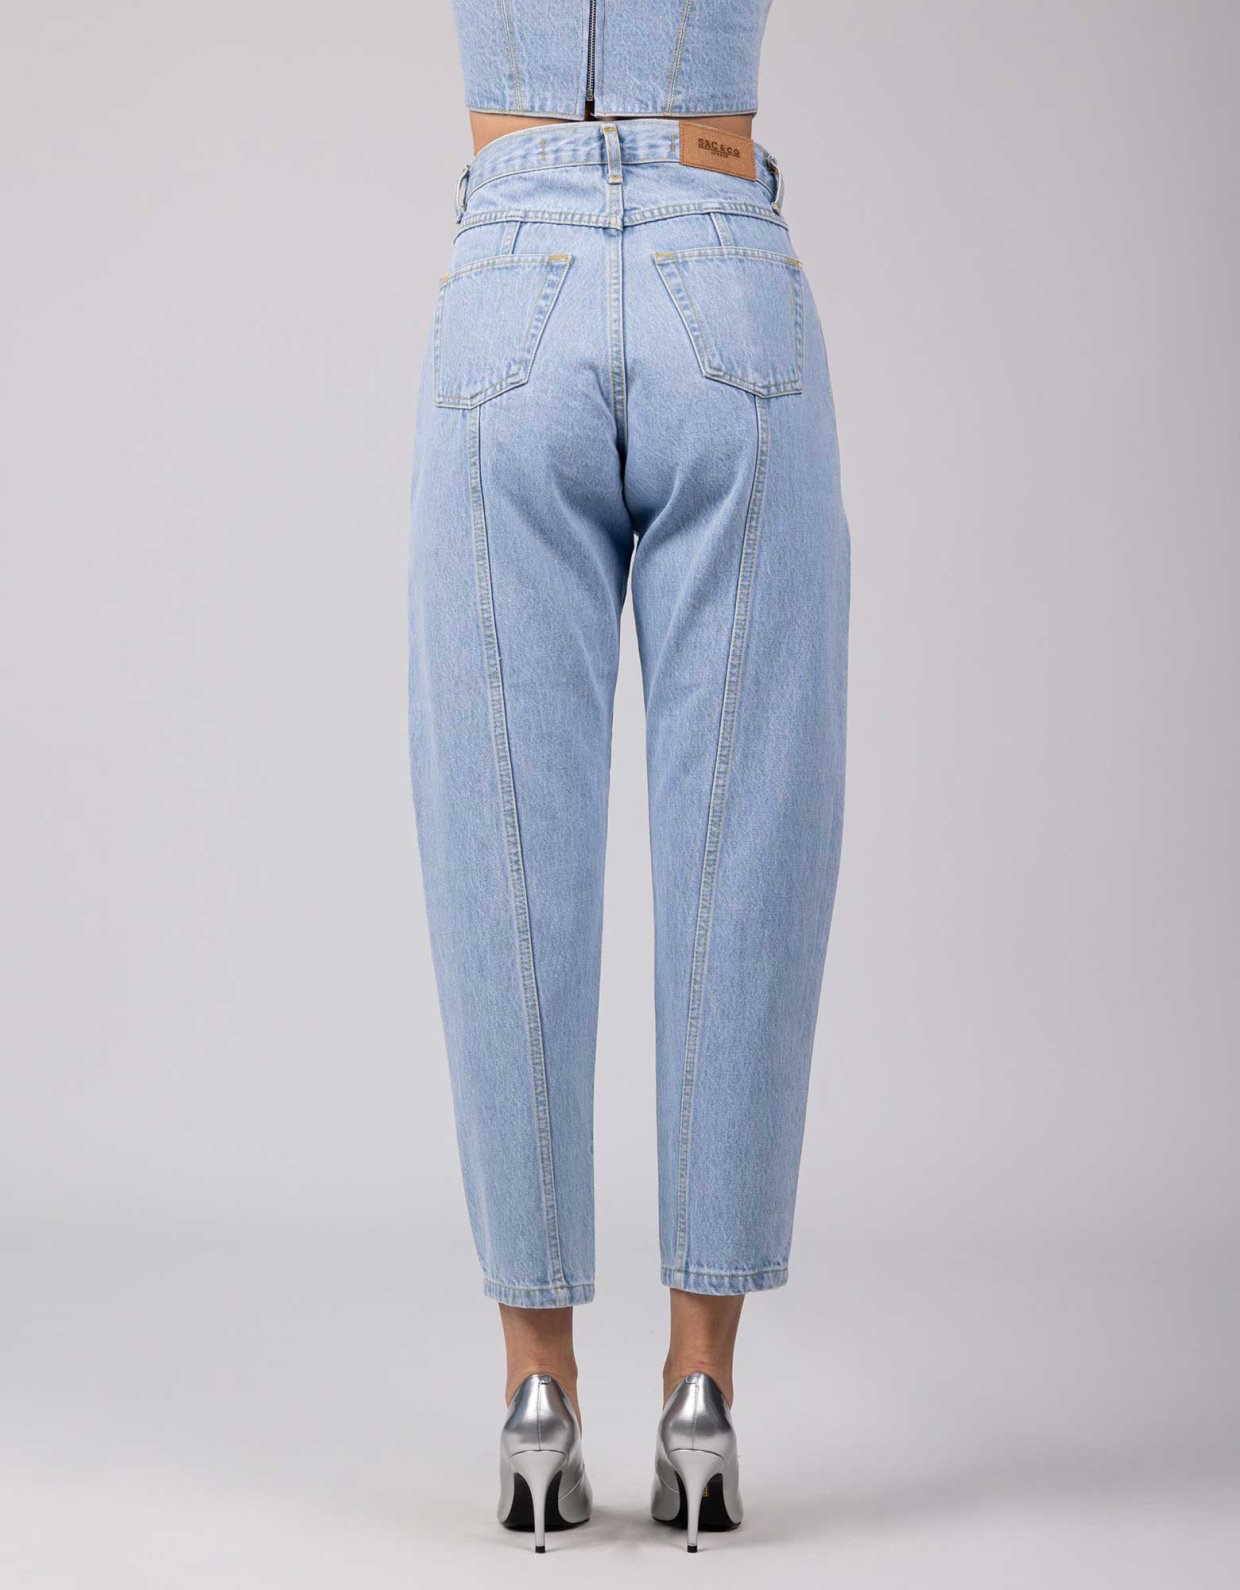 Sac & CO Jeans Diana slim fit light blue denim